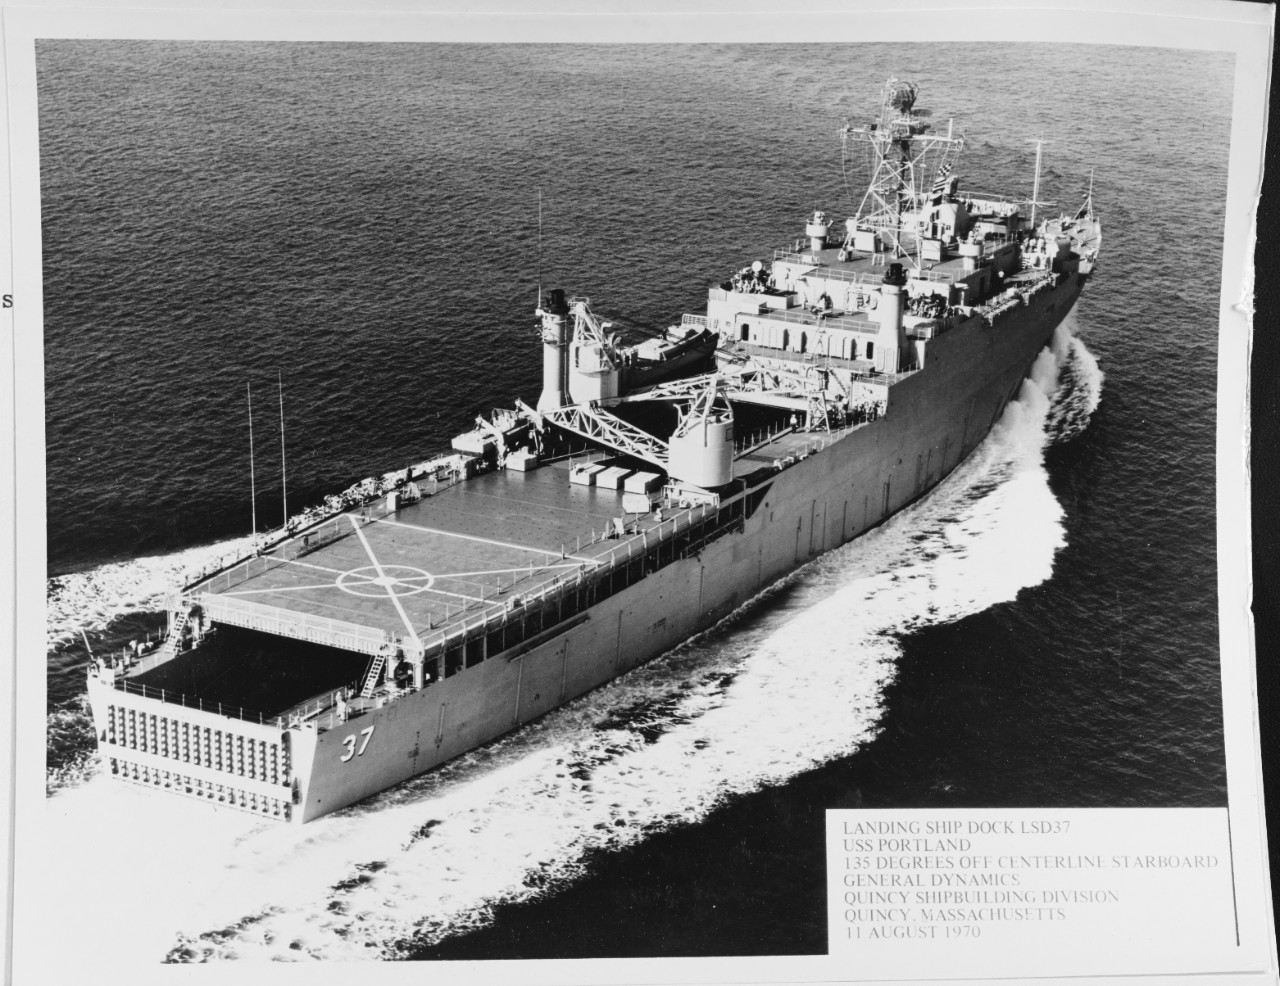 USS PORTLAND (LSD-37)